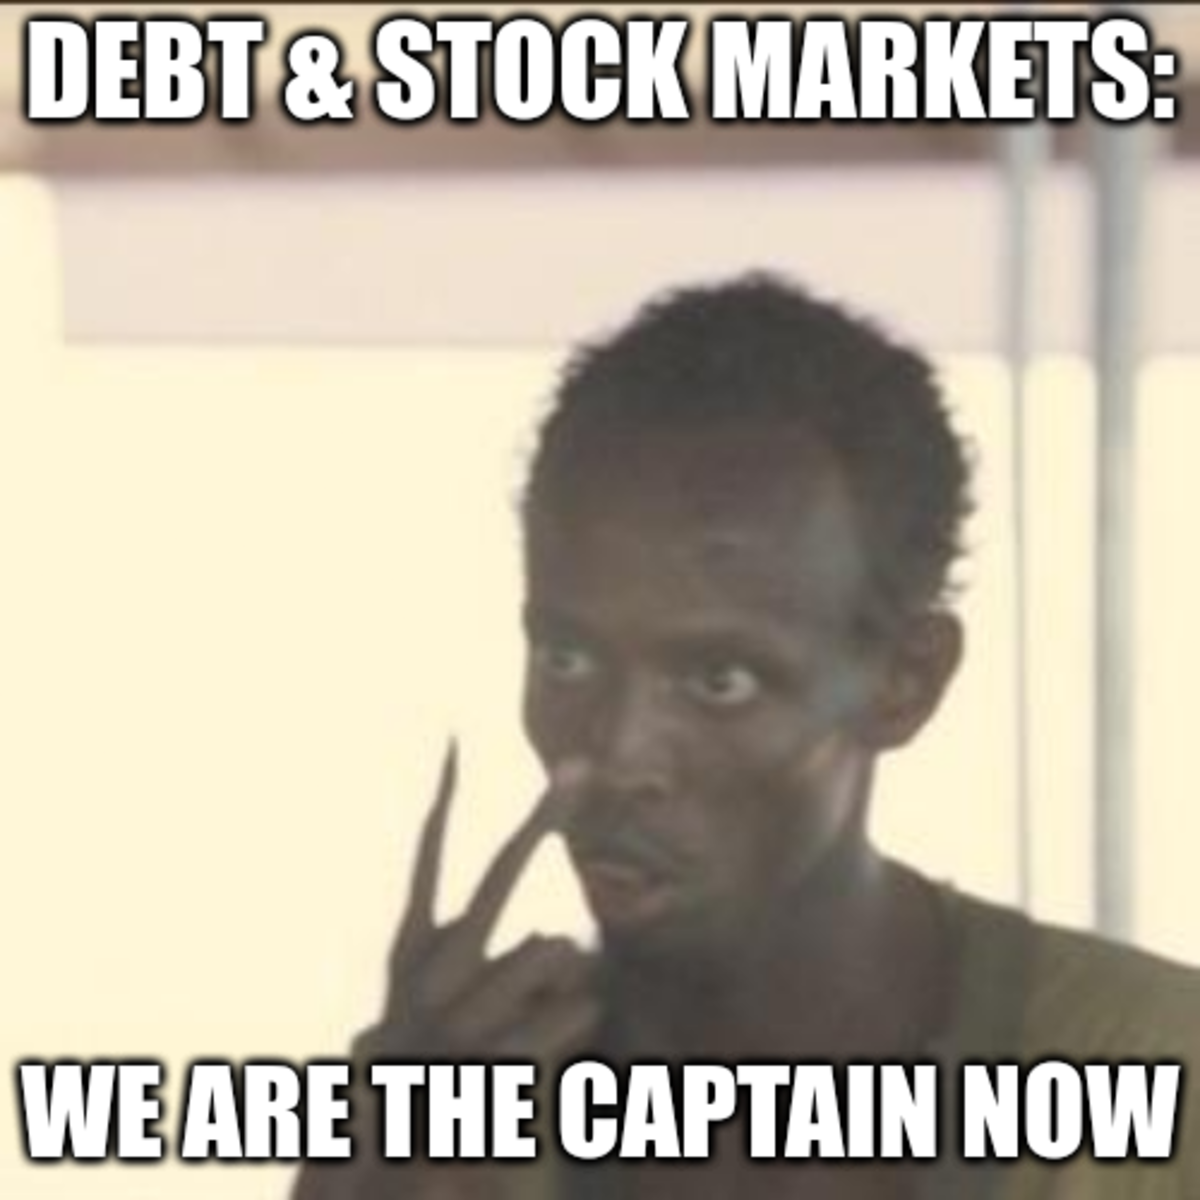 debt and stock markets meme